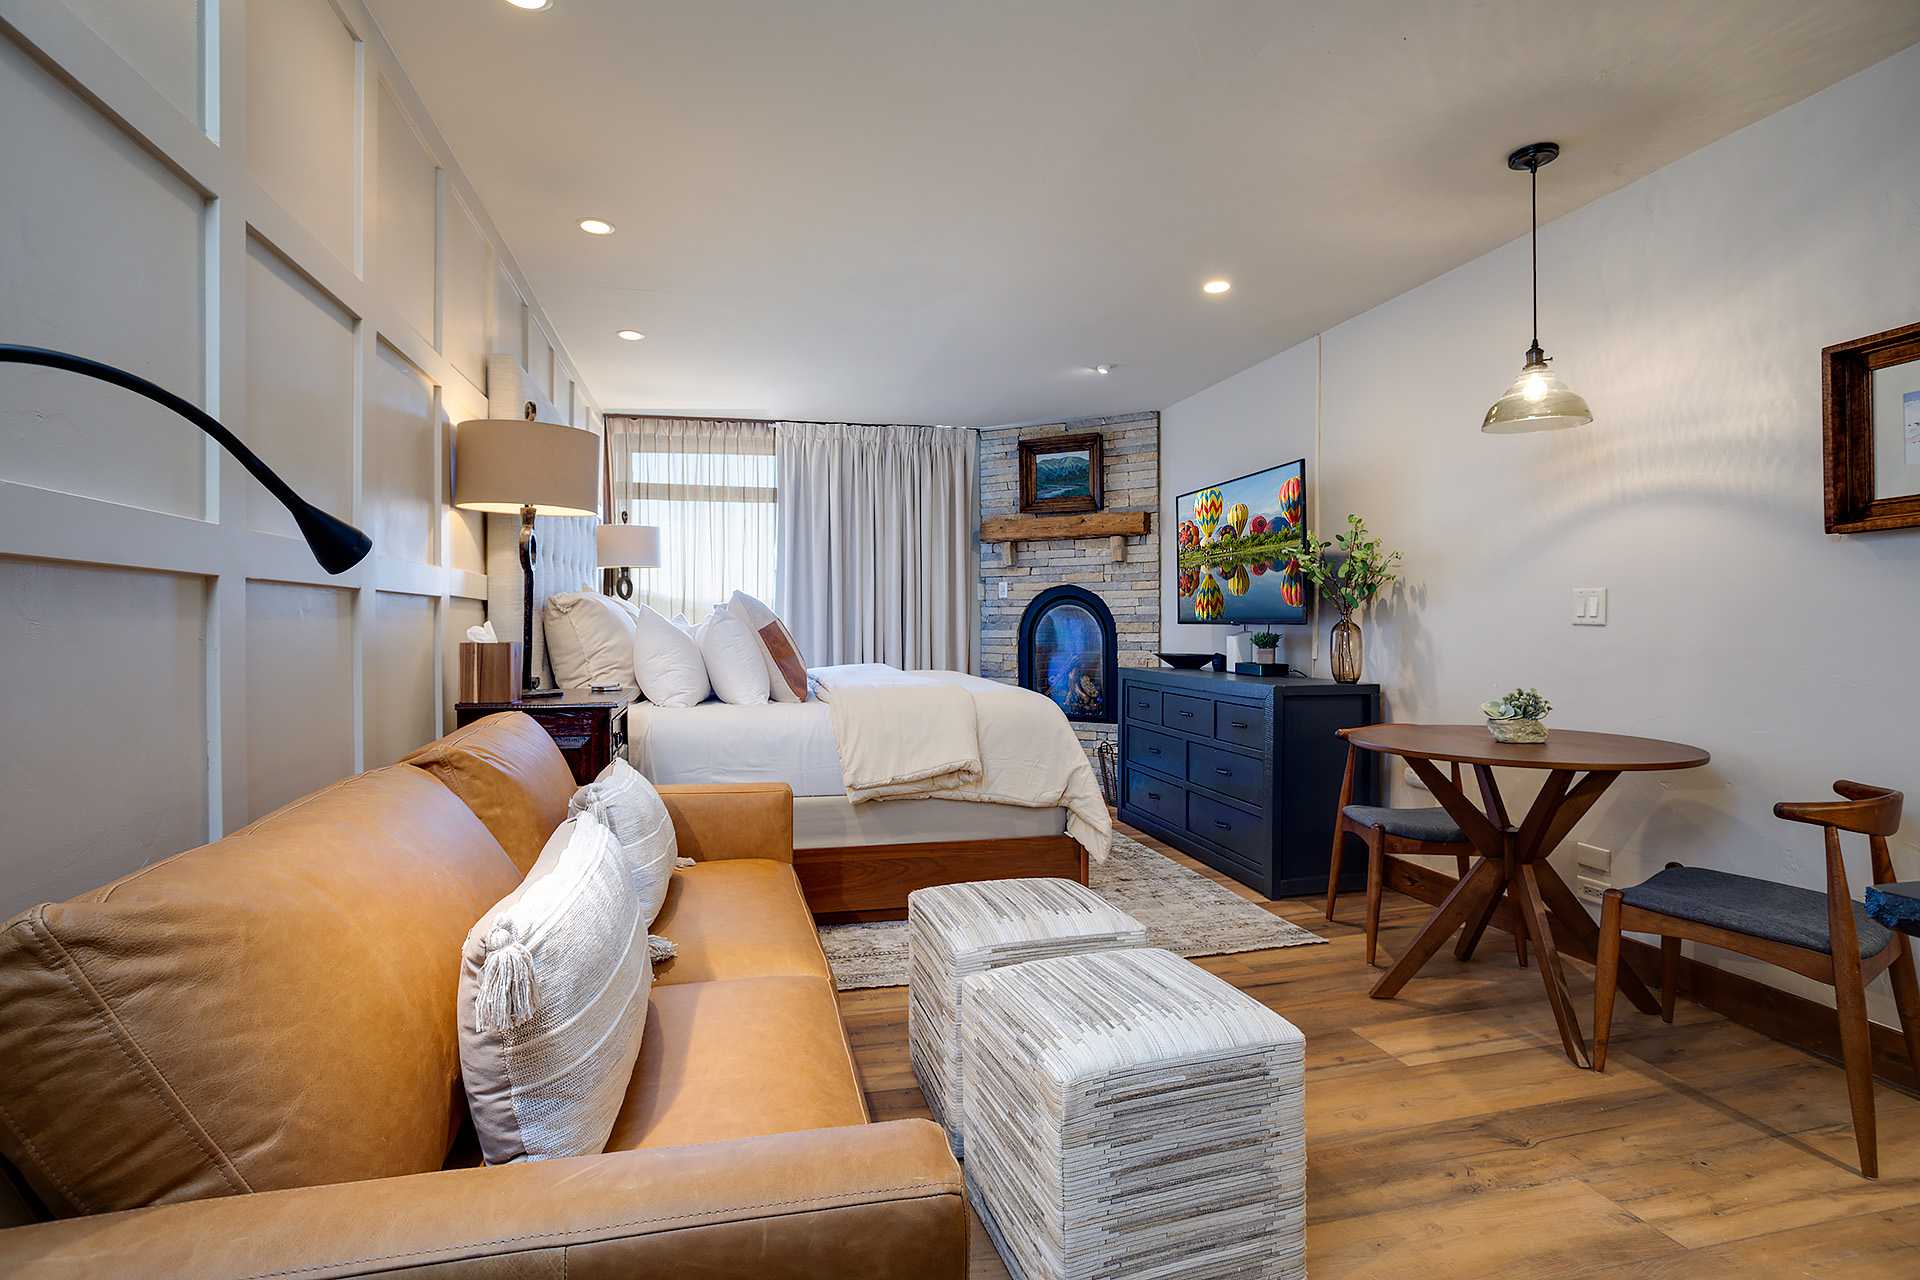 SV601 by Mtn Resorts: Studio suite in luxury hotel!